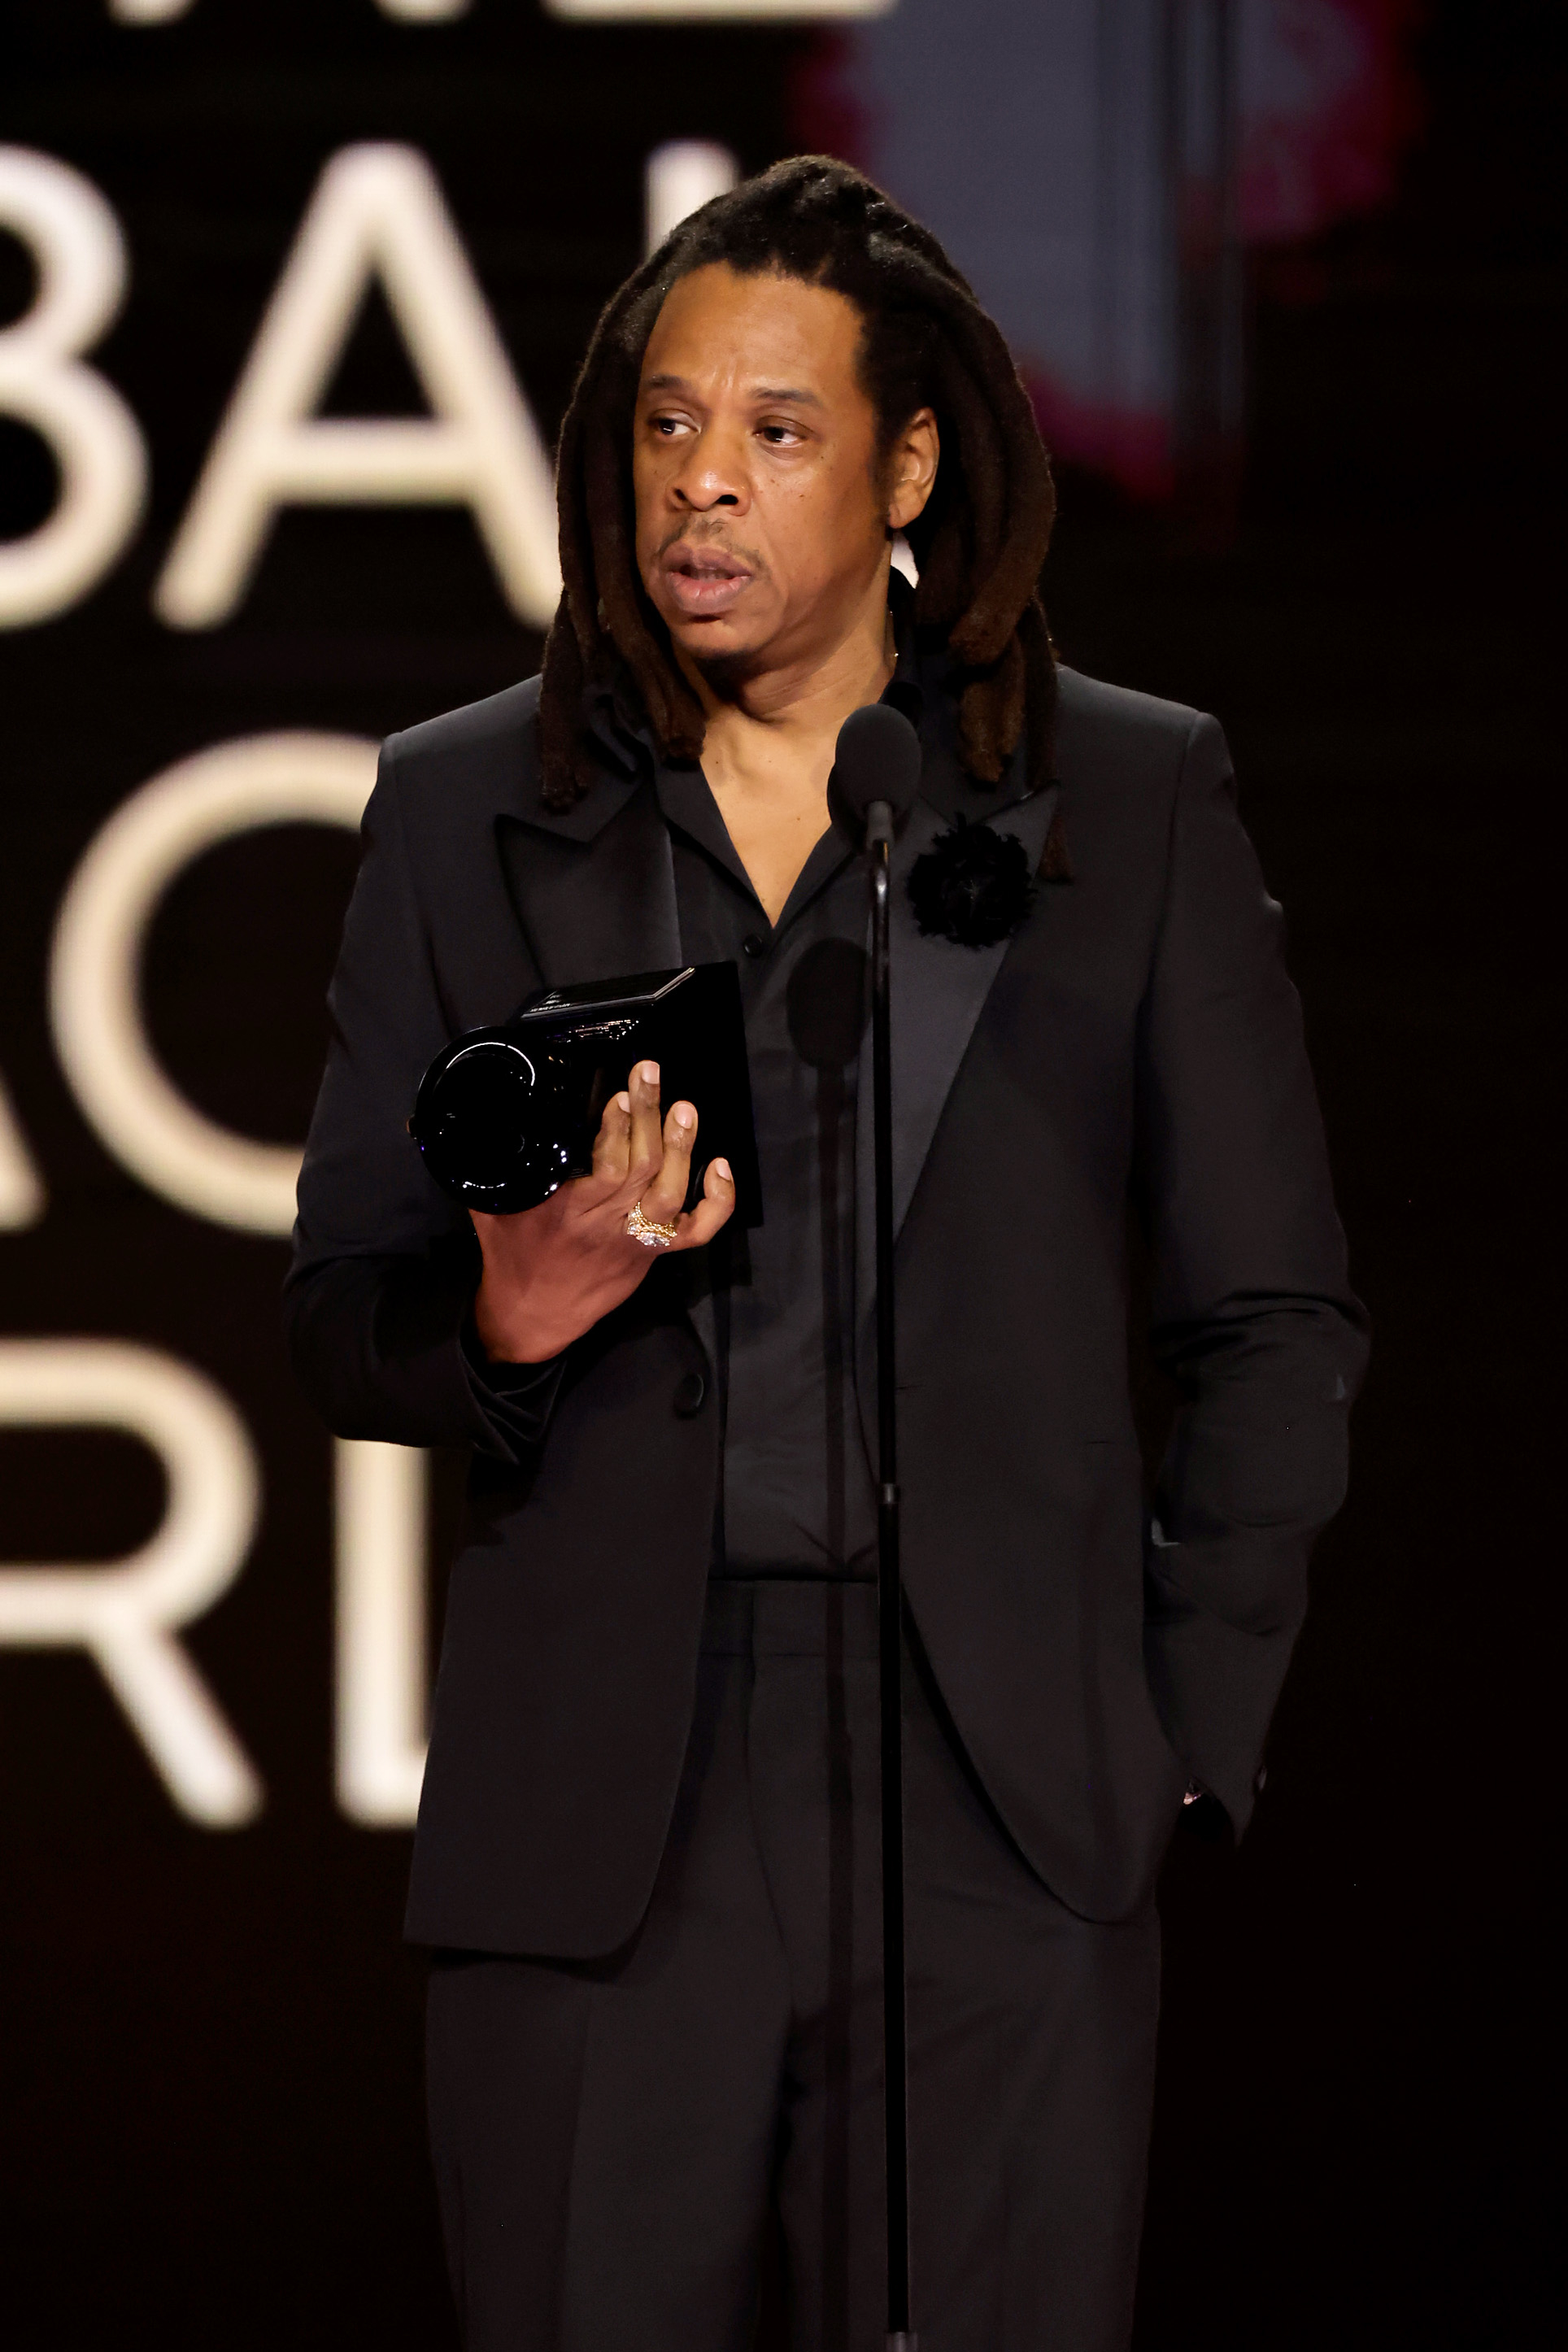 Jay-Z accepting his award at the Grammys